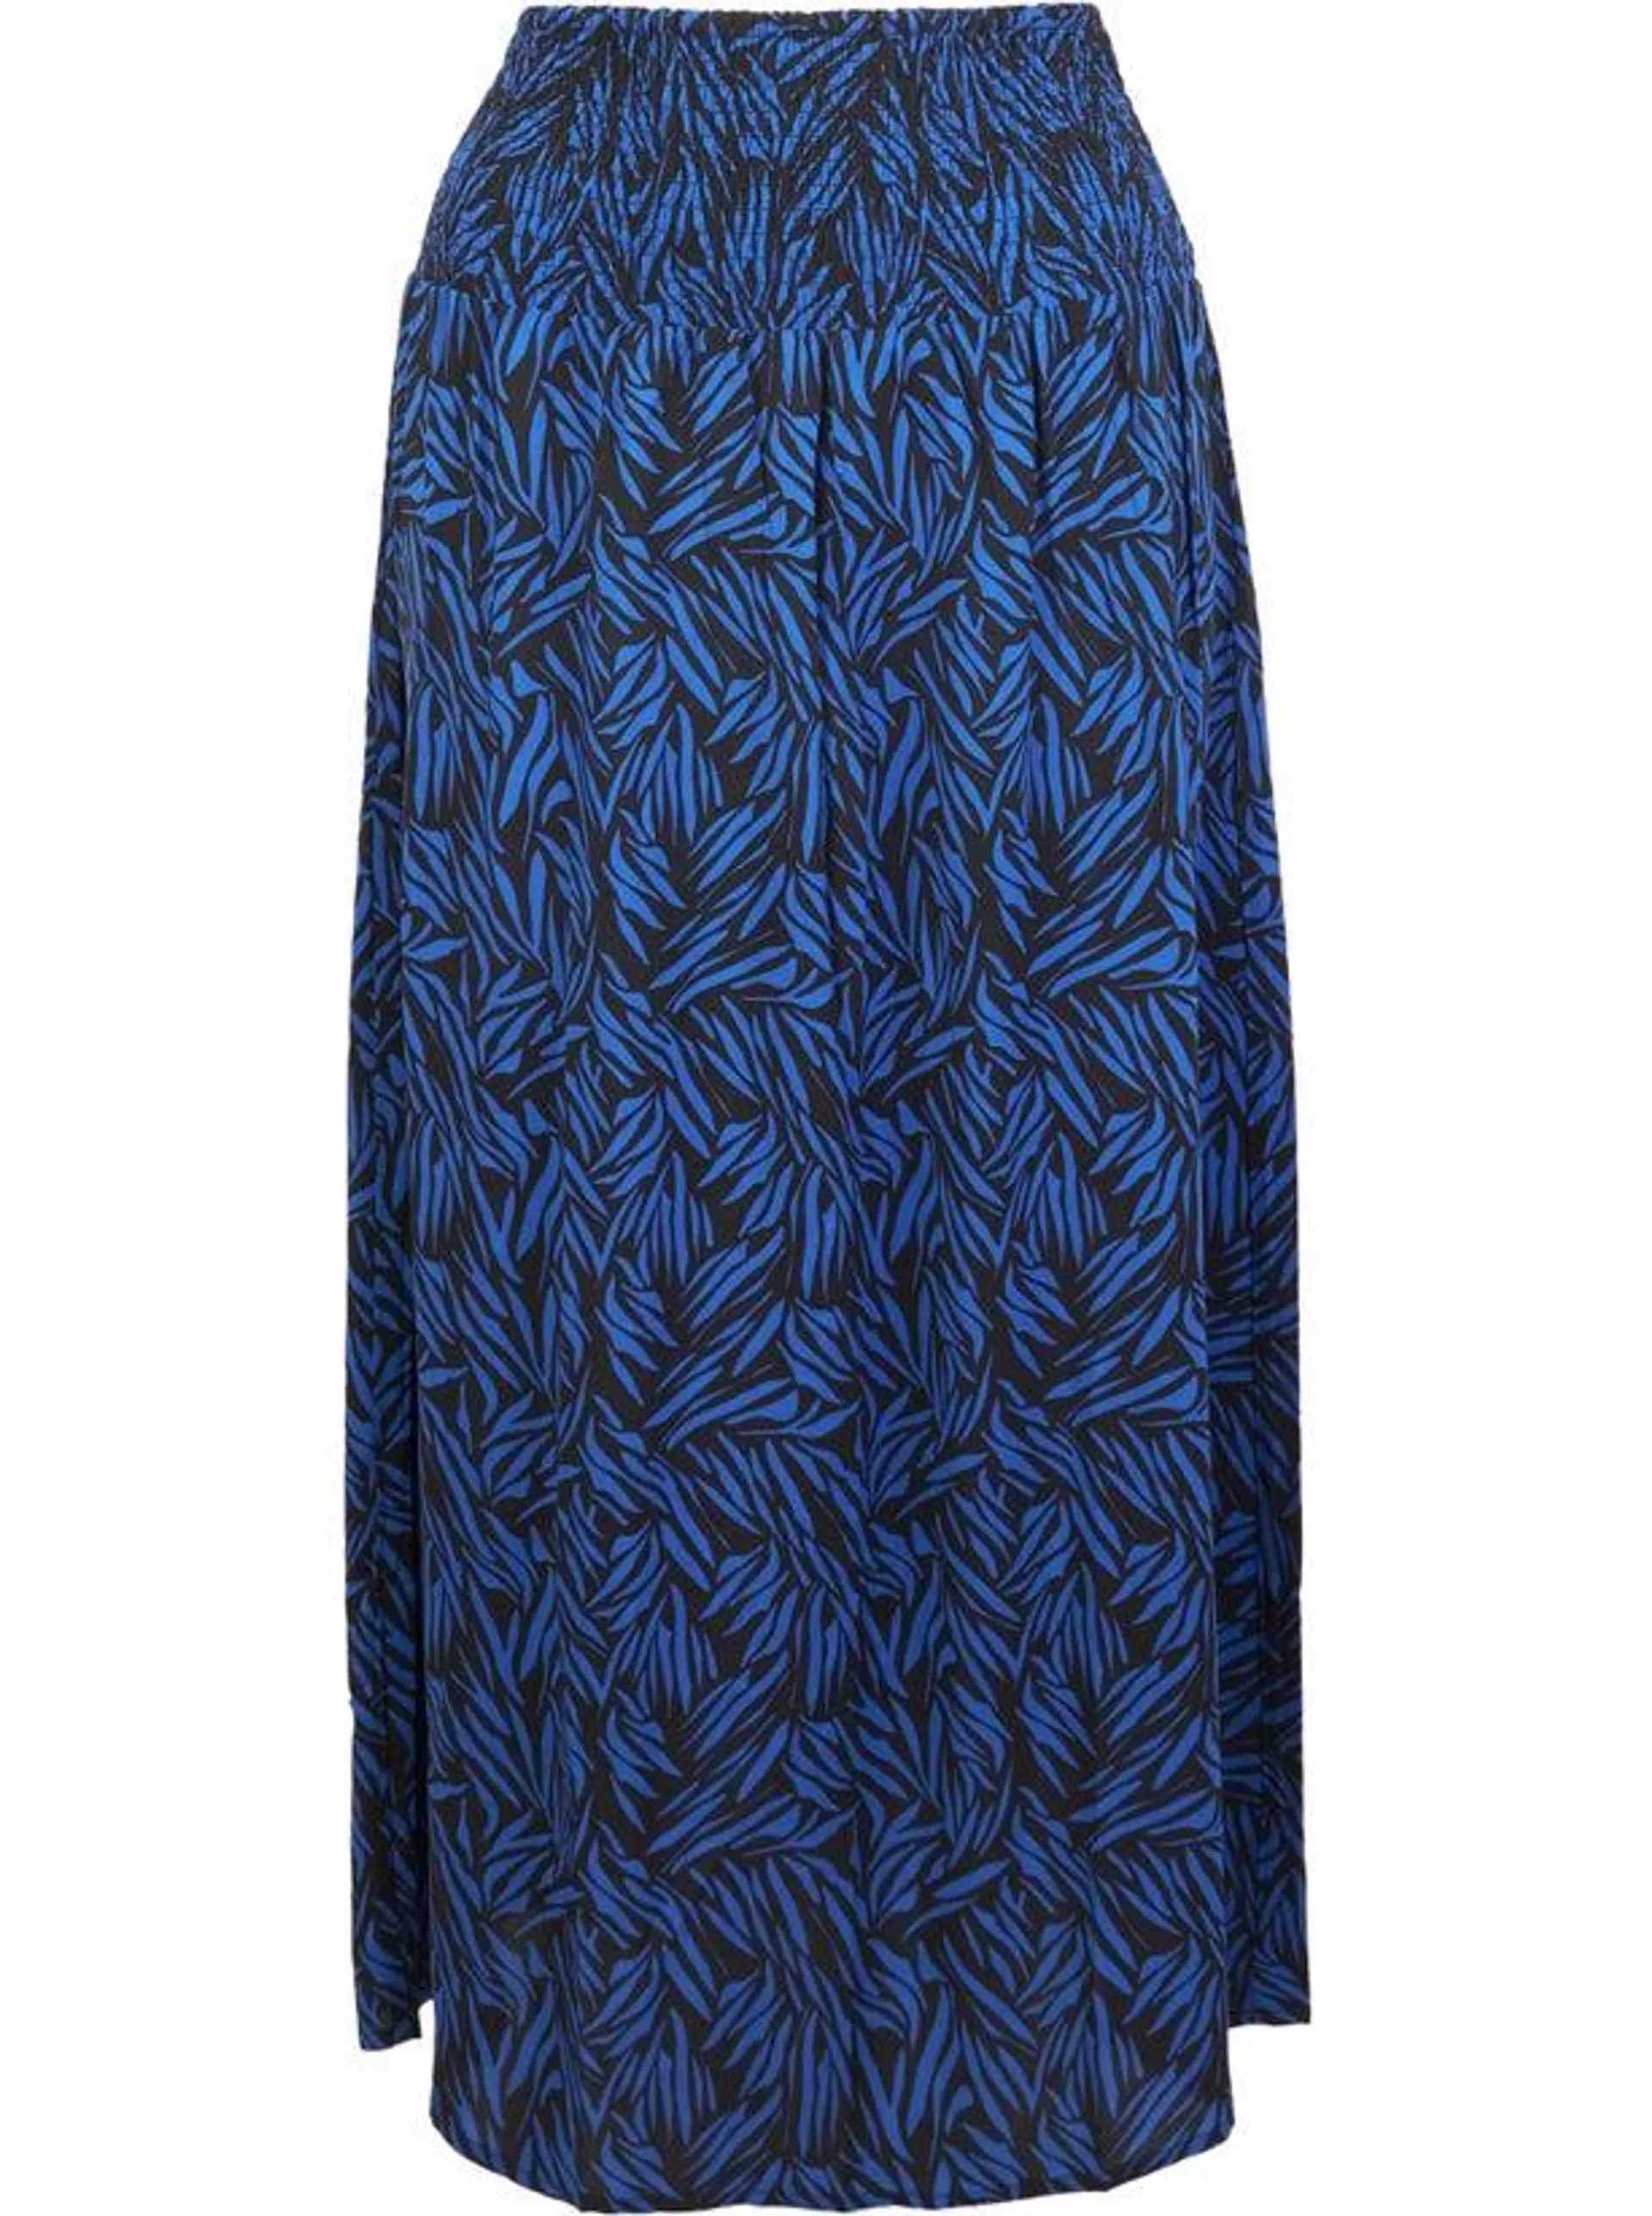 Women's Shirred Waist Skirt in Blue / Black Leaf